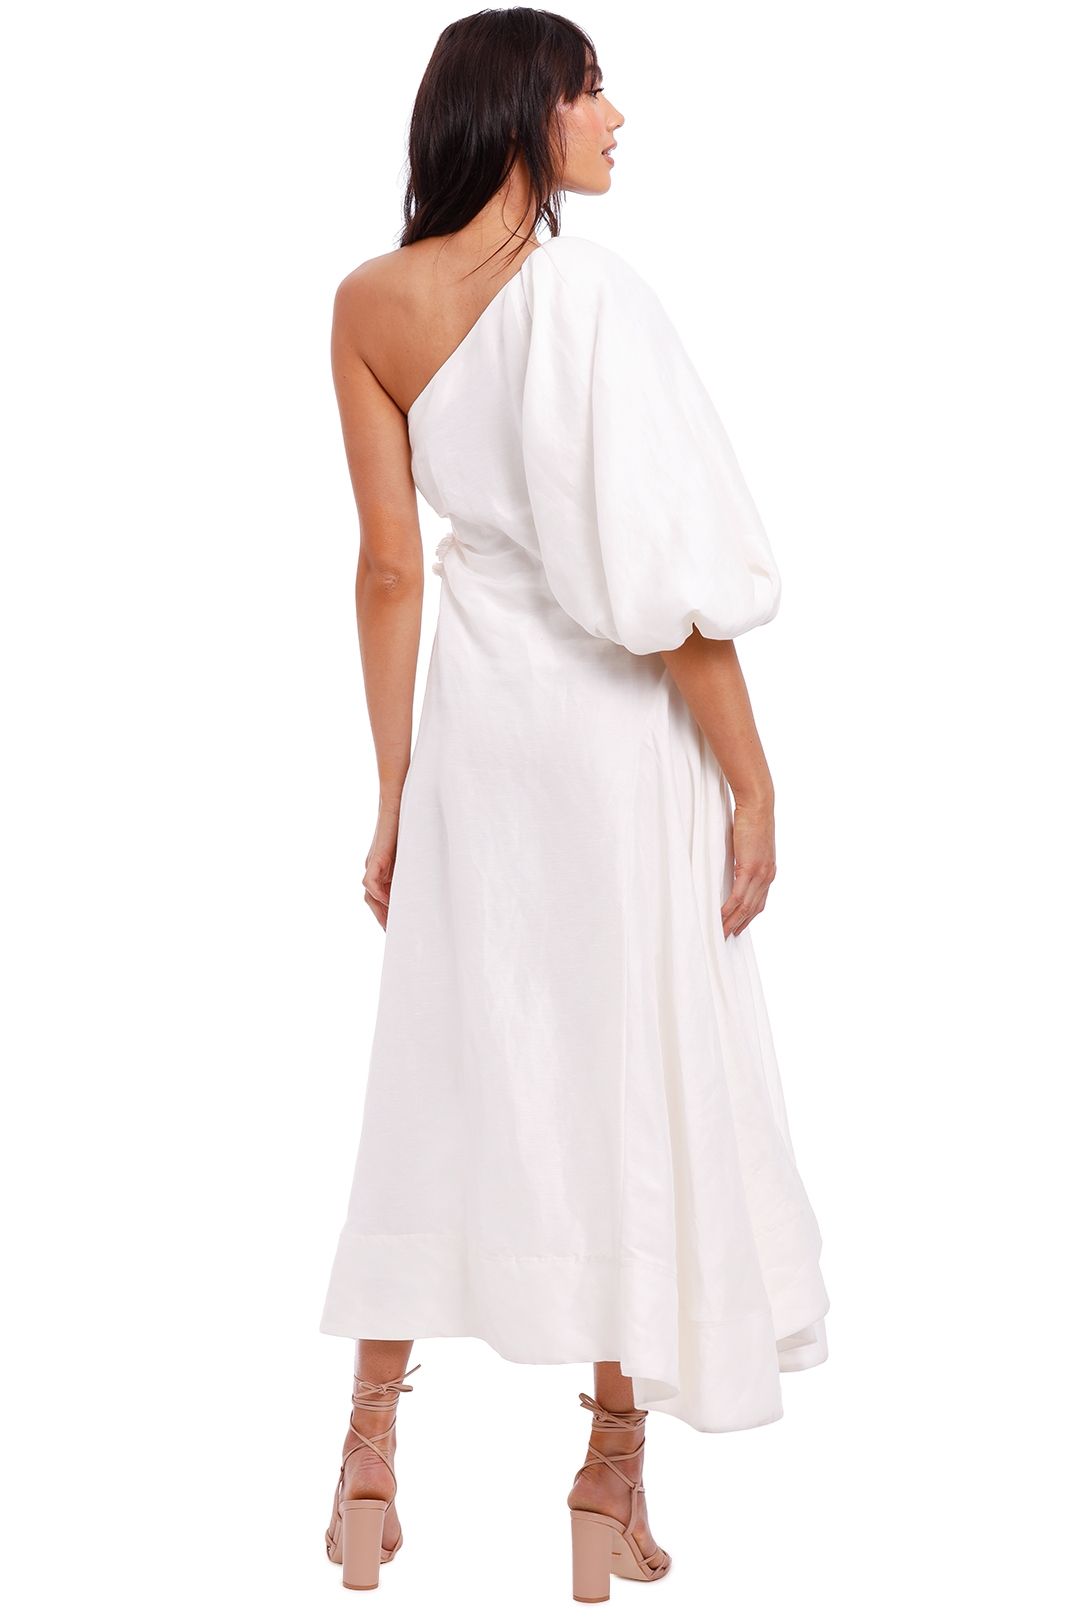 AJE Concept Dress White Cutout